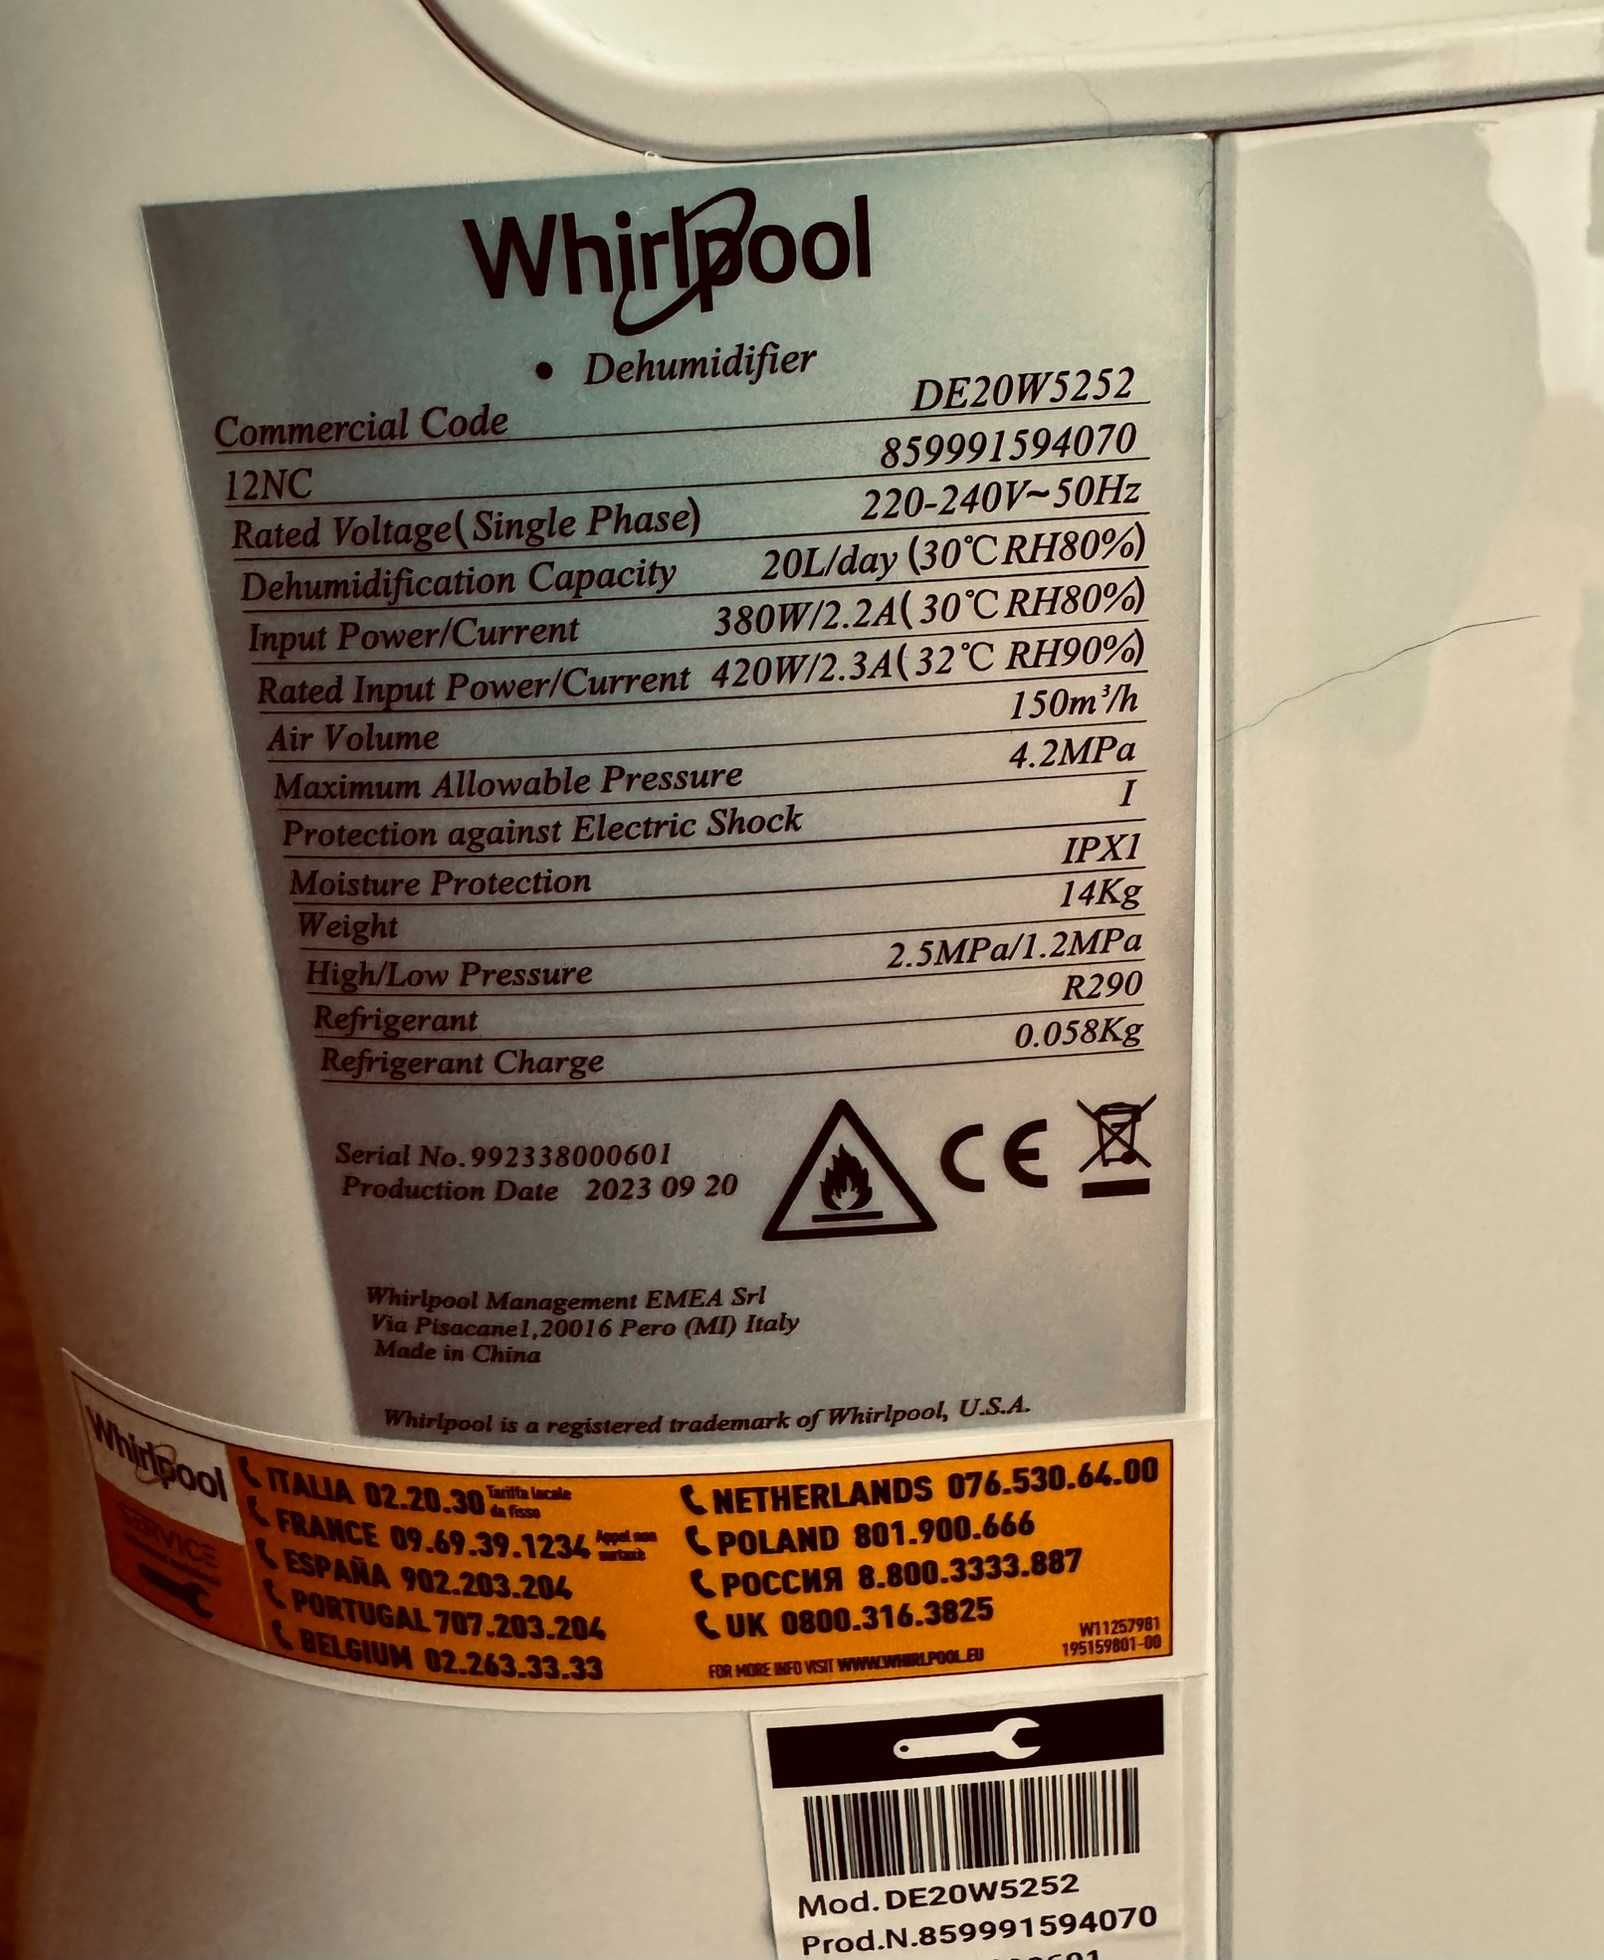 Desumidificador WHIRLPOOL DE20W5252 (6.5 L - 20 L/dia)